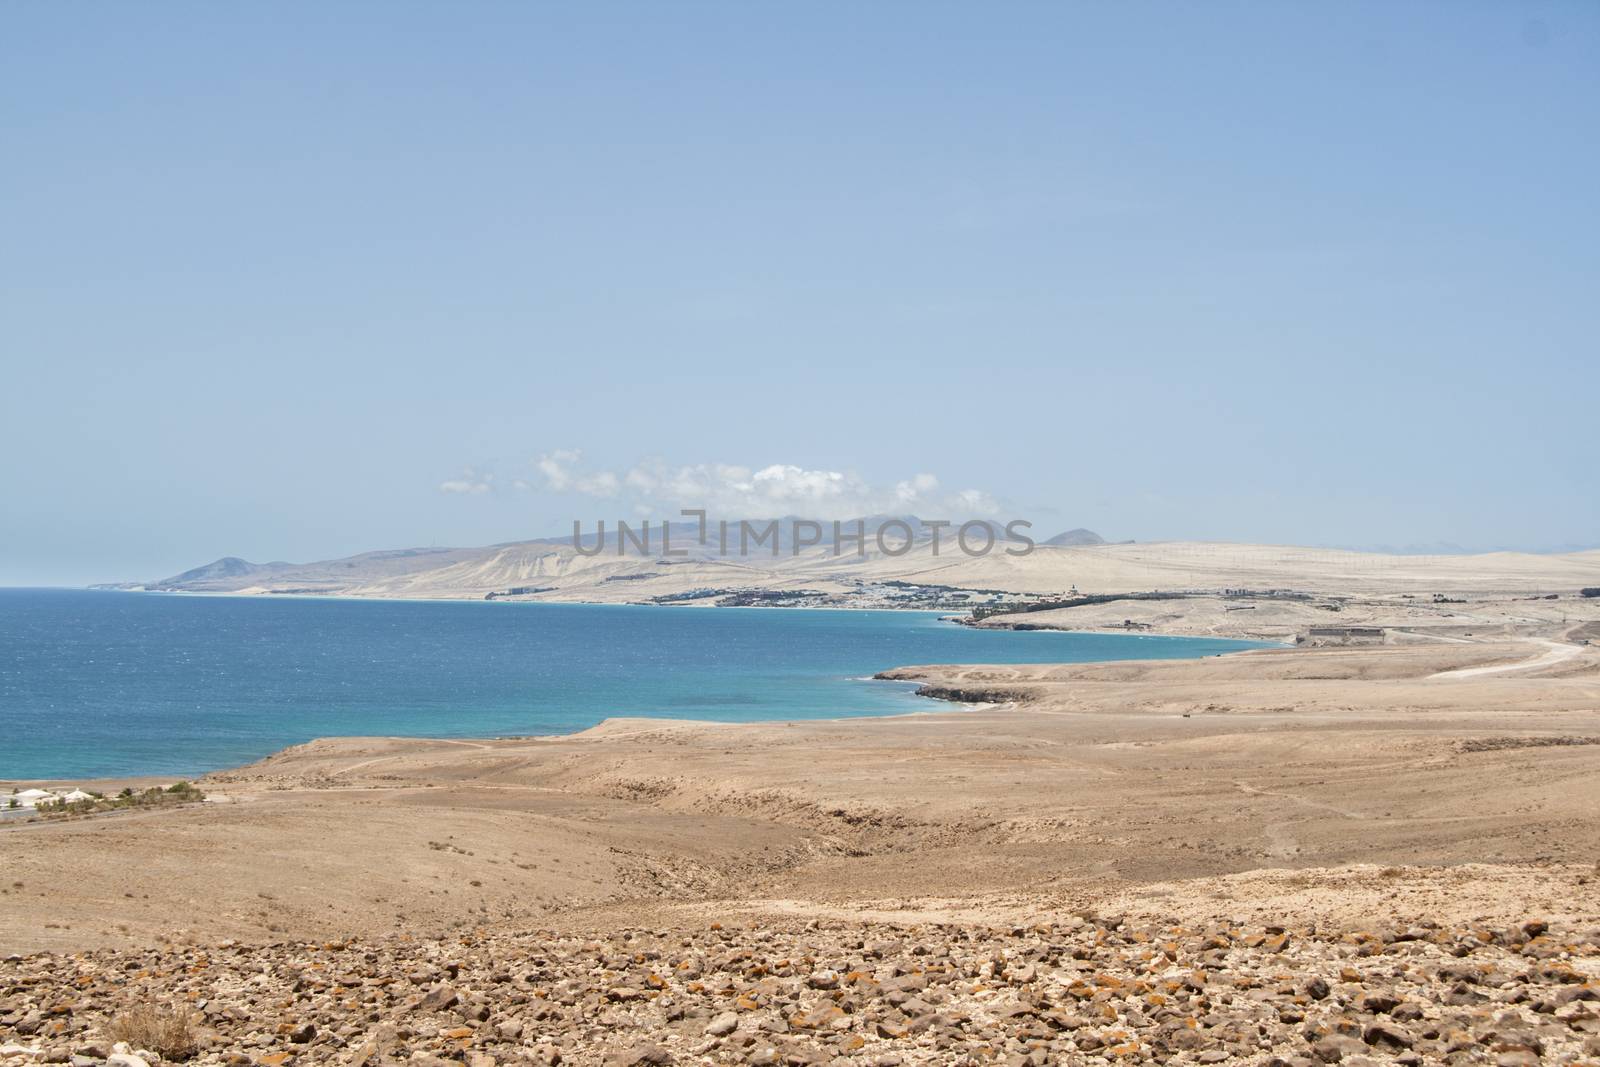 Fuerteventura volcanic landscape, Canari islands of Spain.